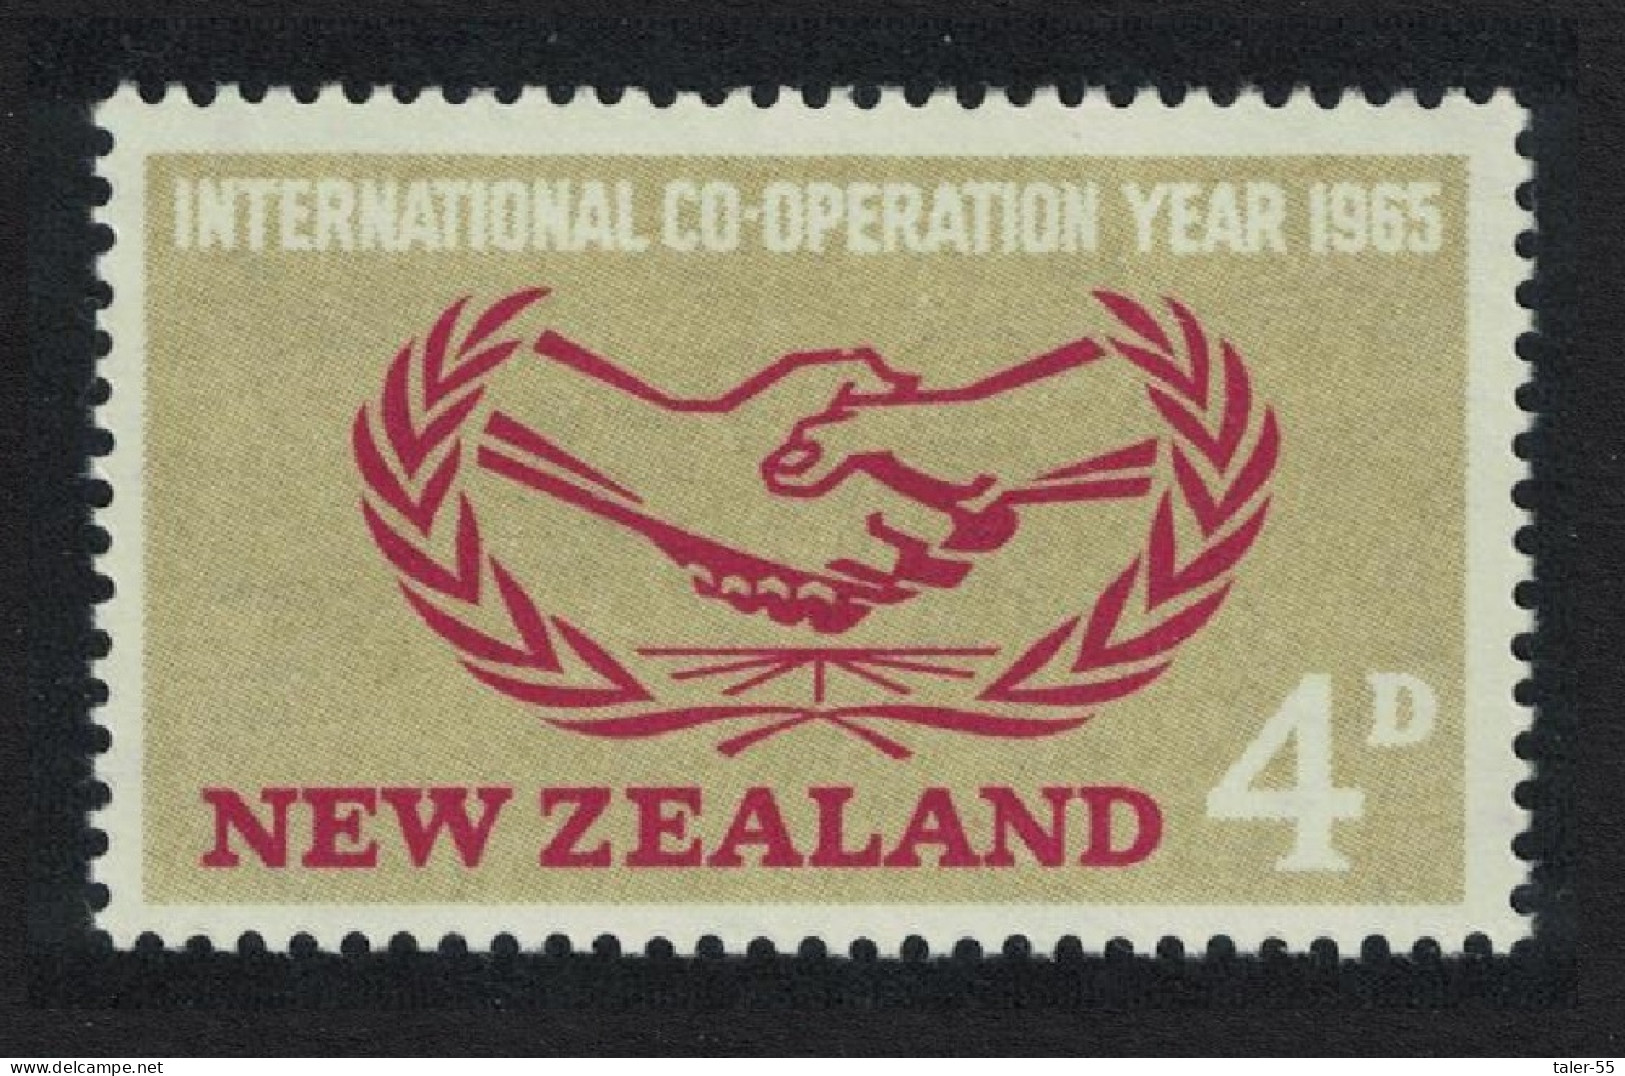 New Zealand International Co-operation Year 1965 MNH SG#833 - Neufs